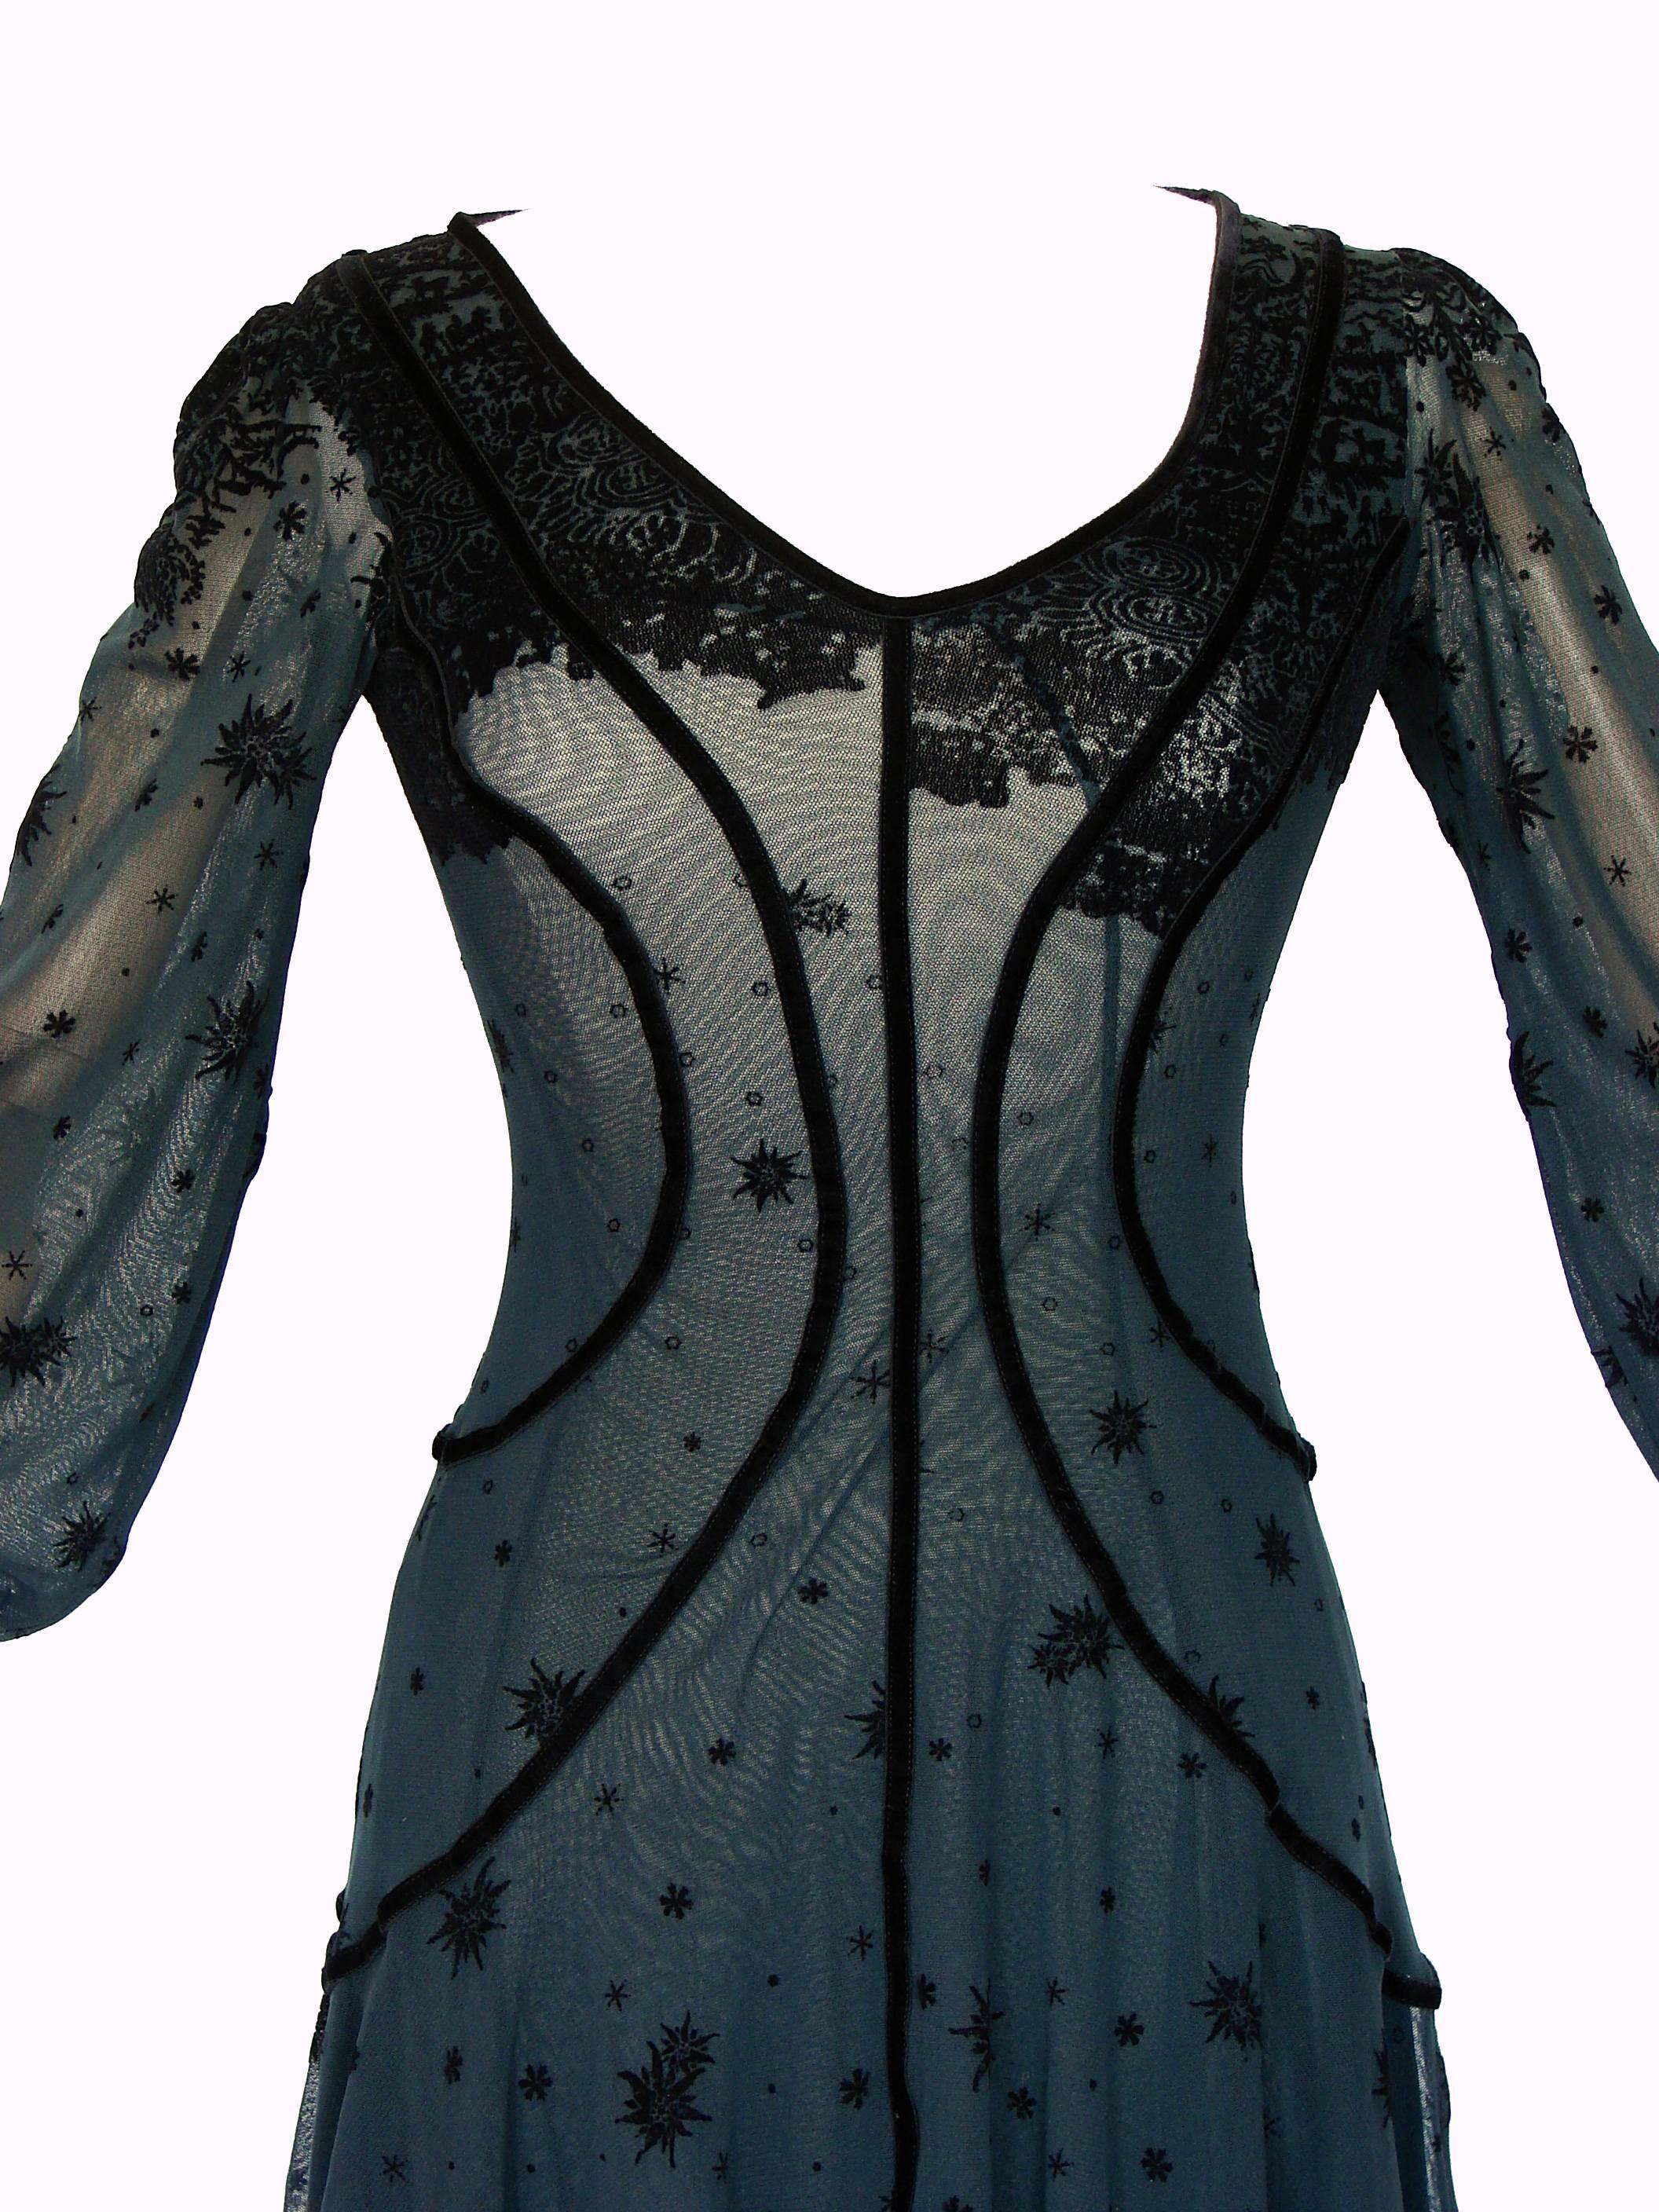 Jean Paul Gaultier Exquisite Black Sheer Mesh Cocktail Dress with Velvet Burnout 1